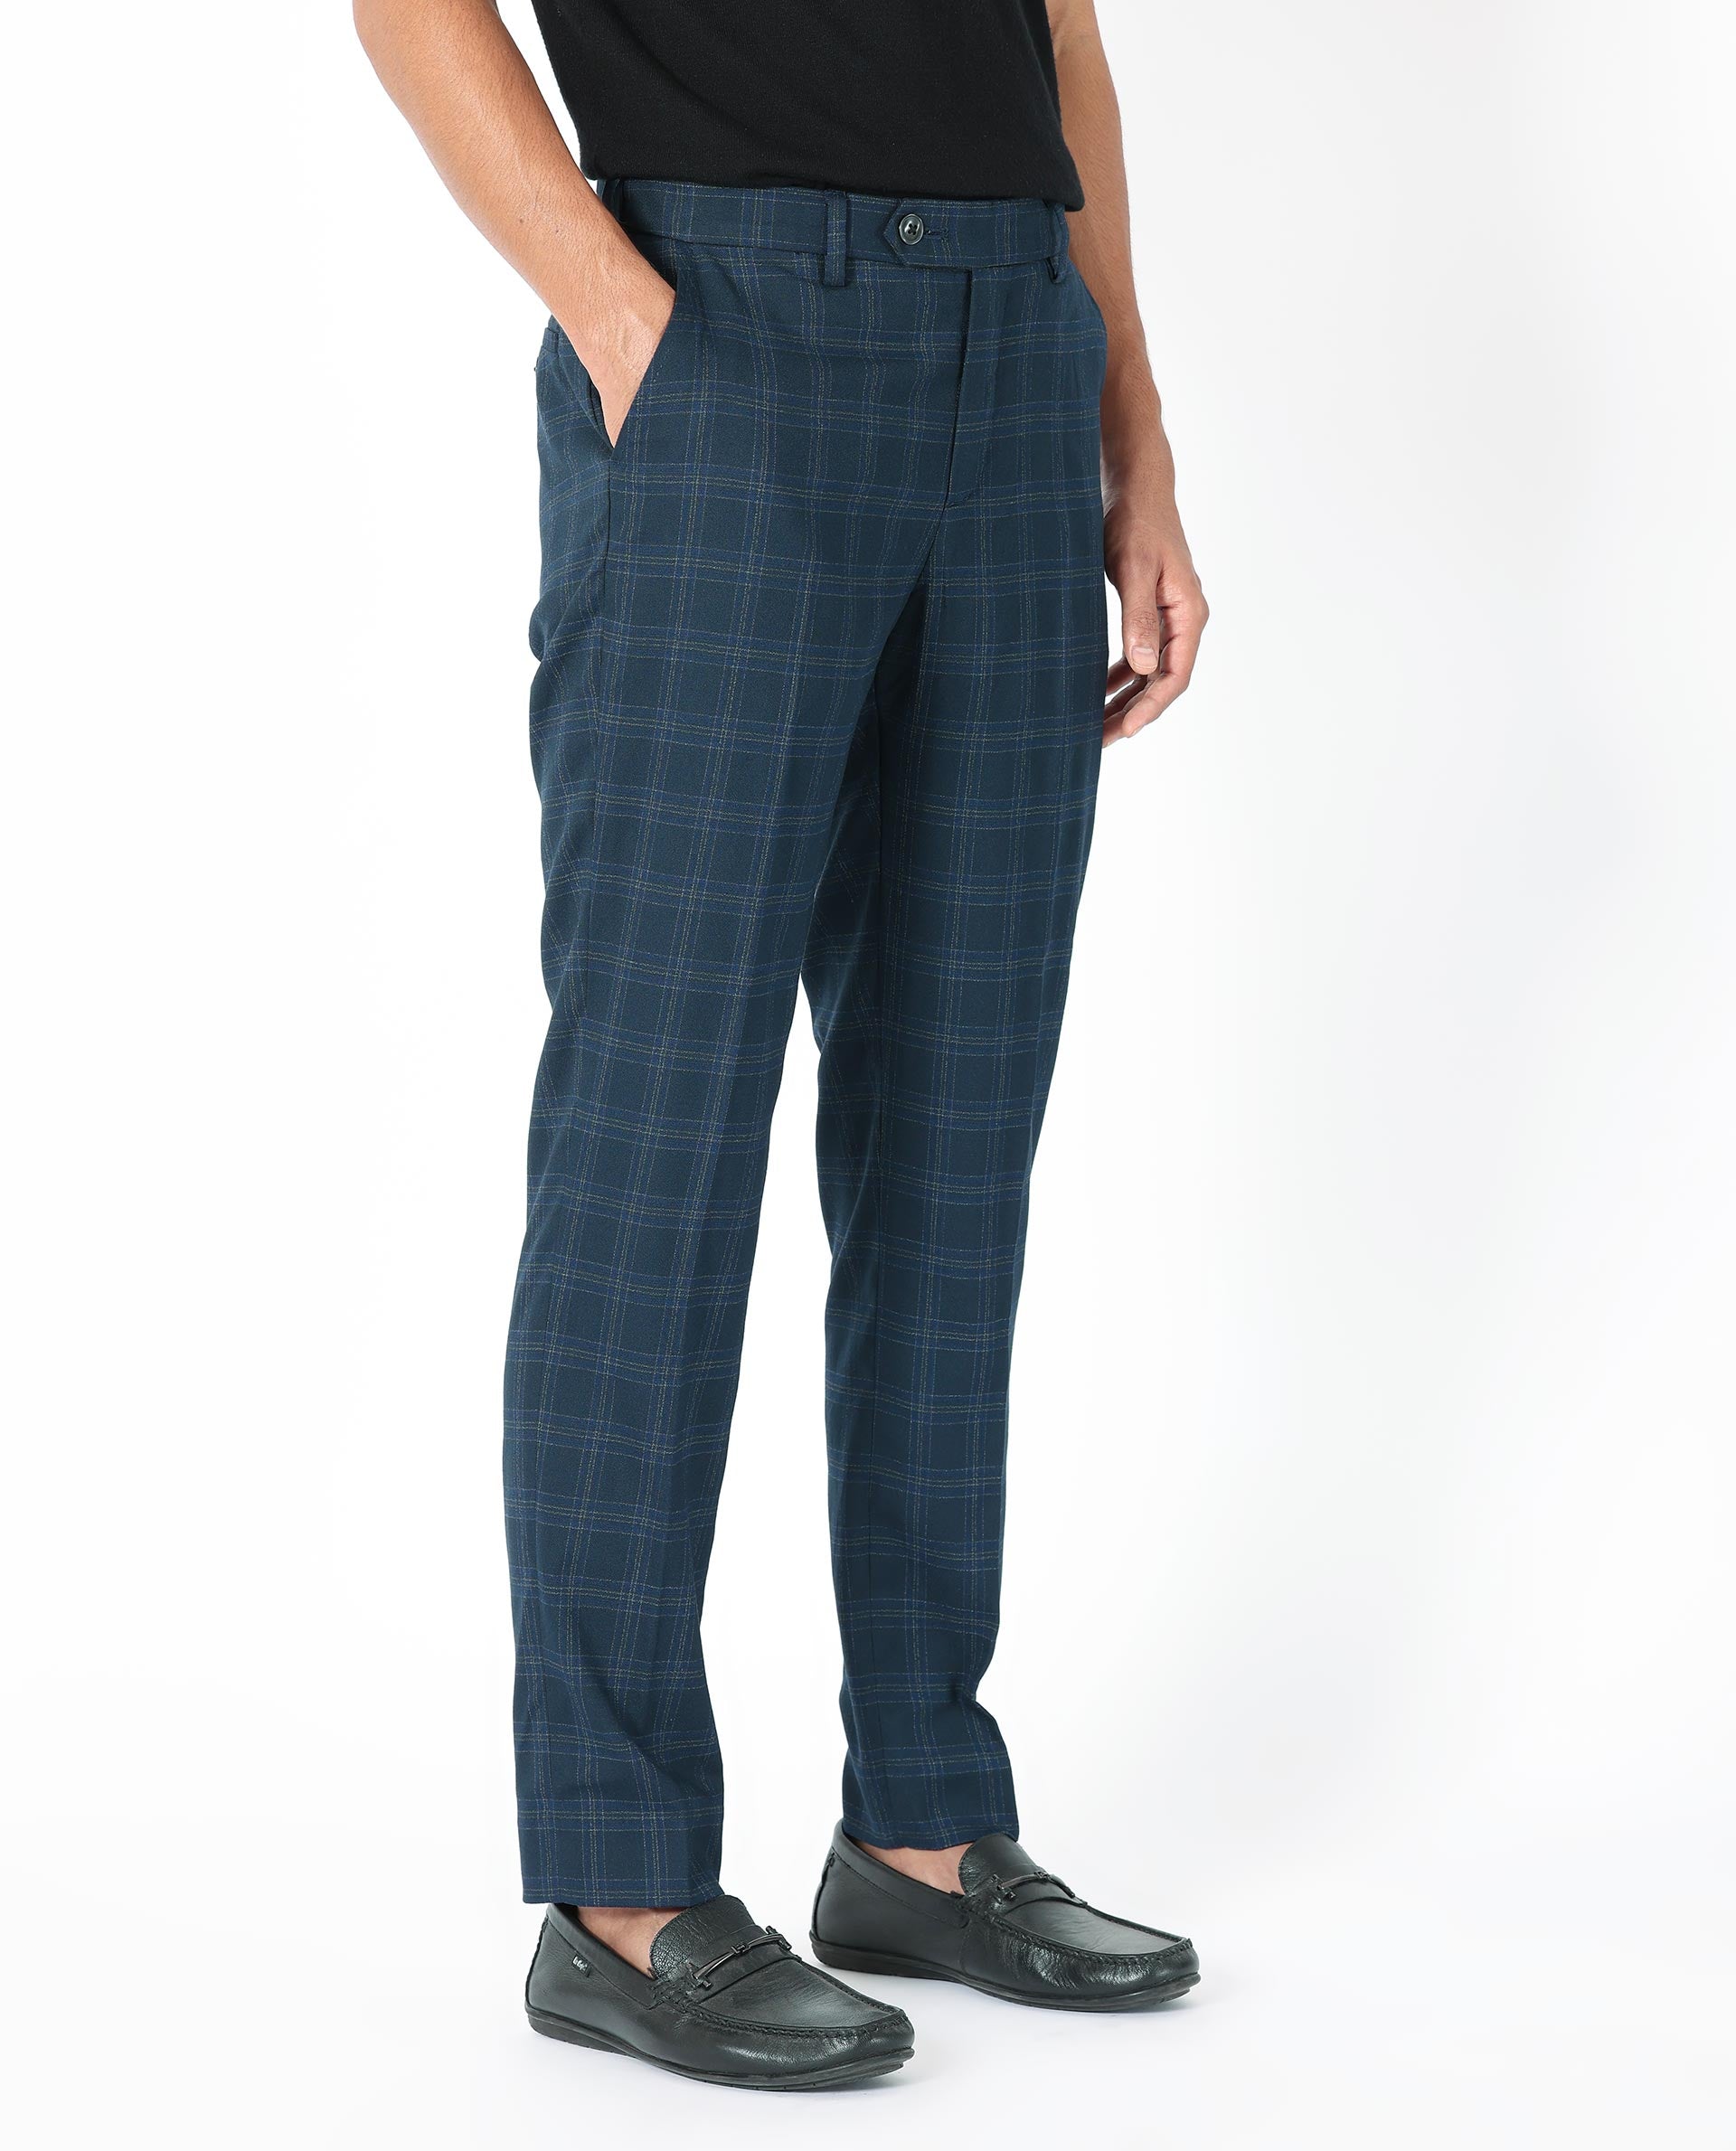 Buy Men Navy Check Slim Fit Formal Trousers Online - 683499 | Peter England